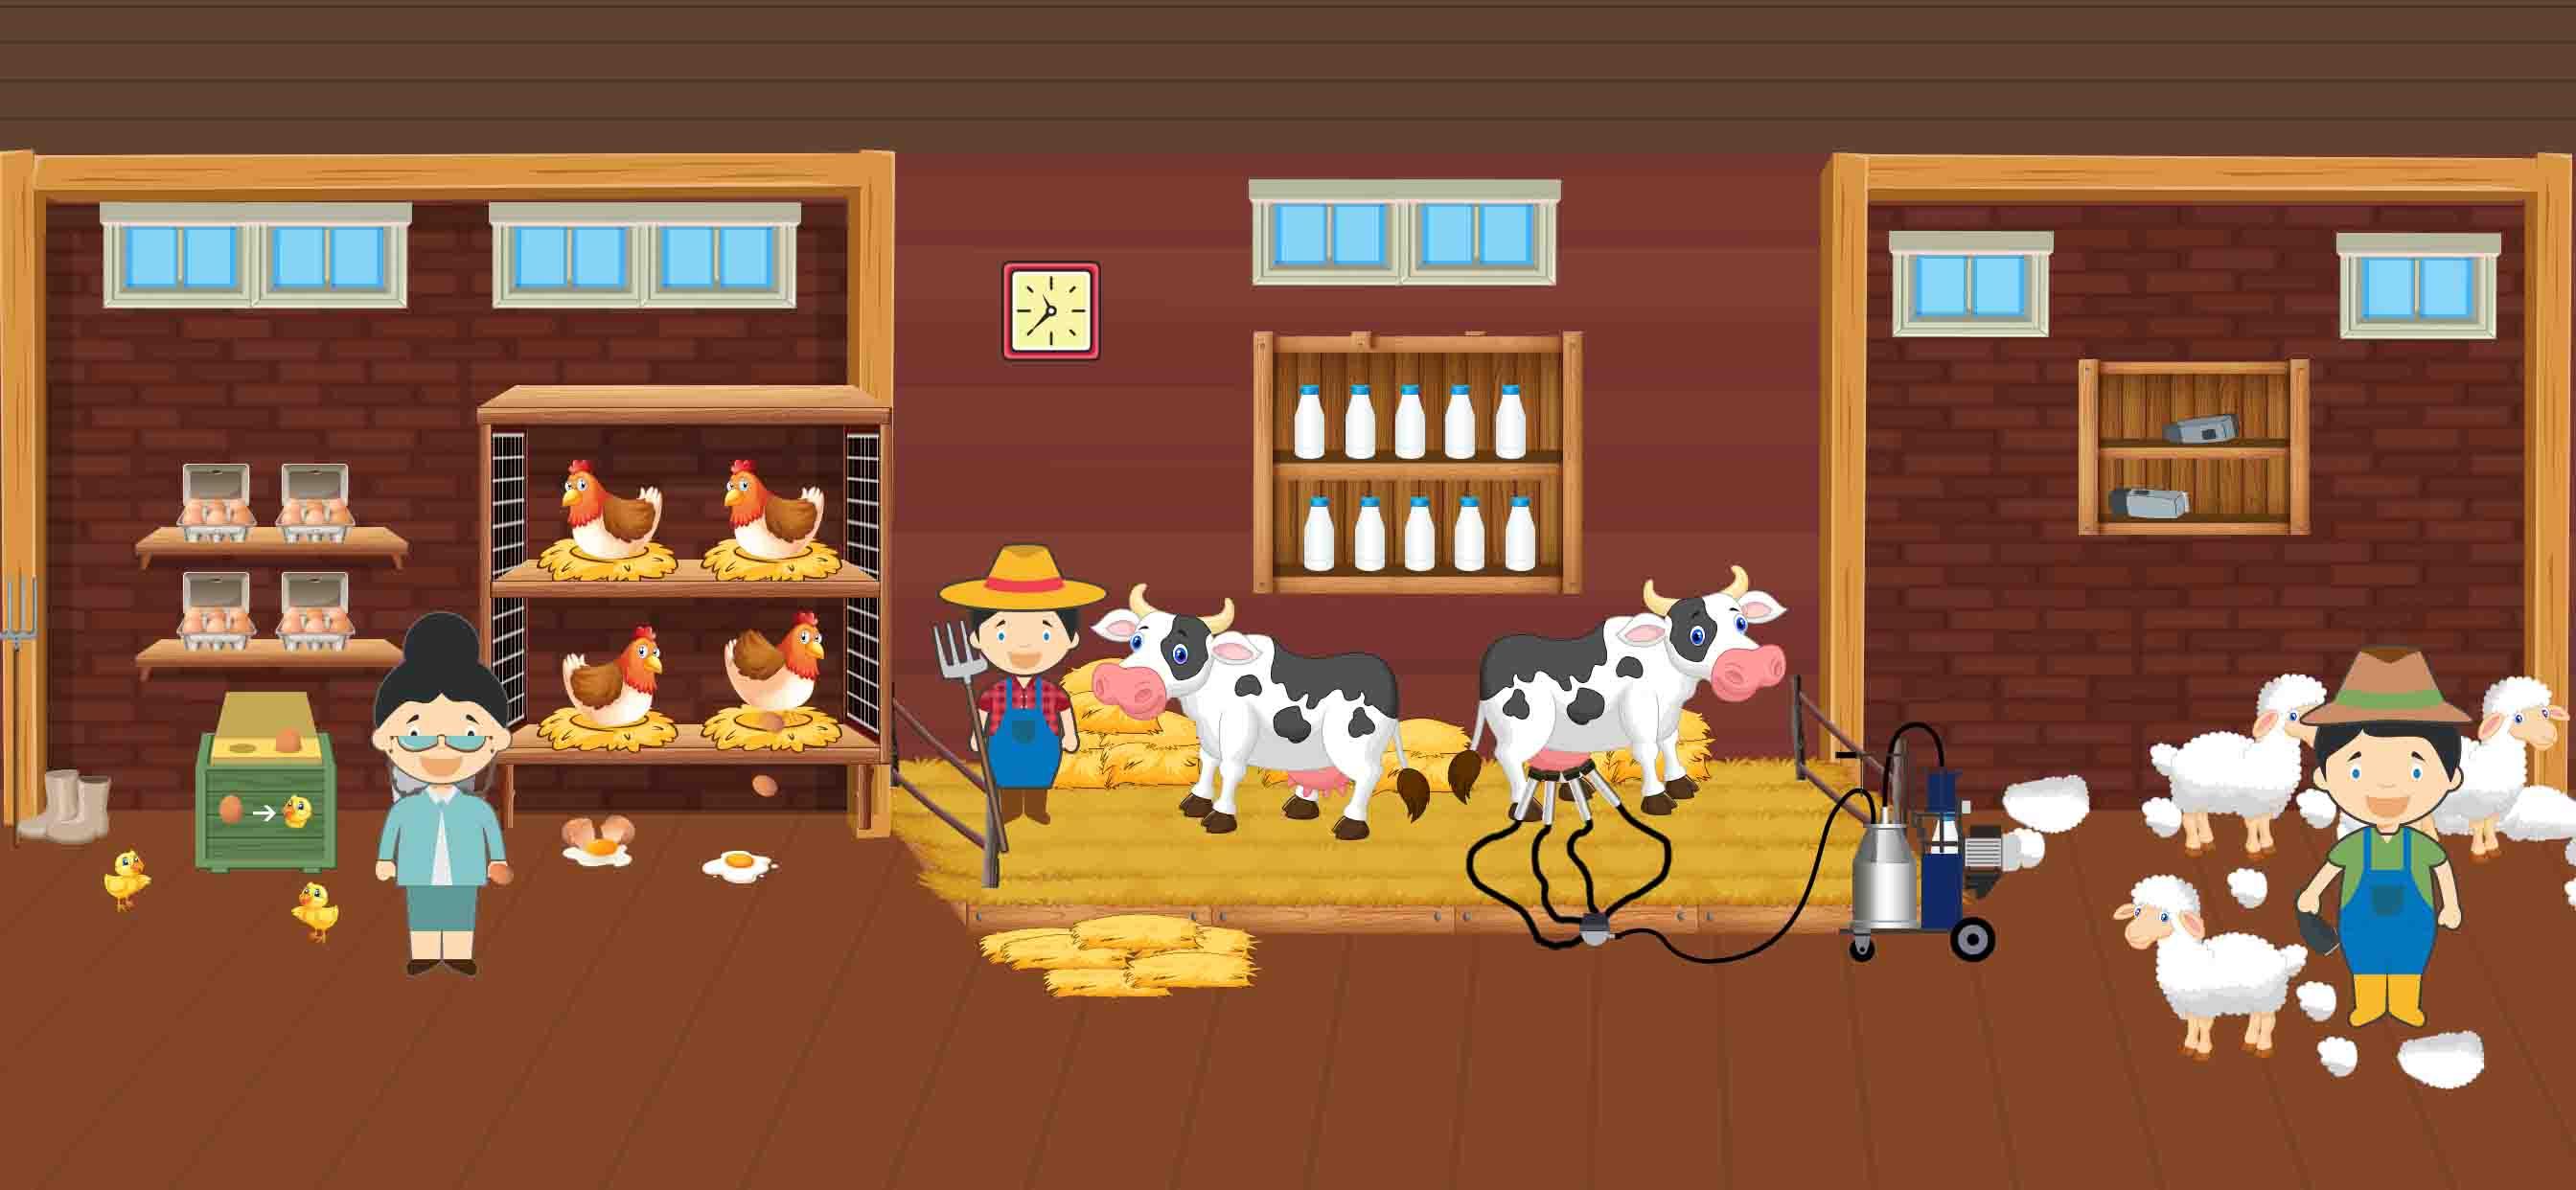 Pretend Town Farm House: Explore Farming World 1.1 Screenshot 8